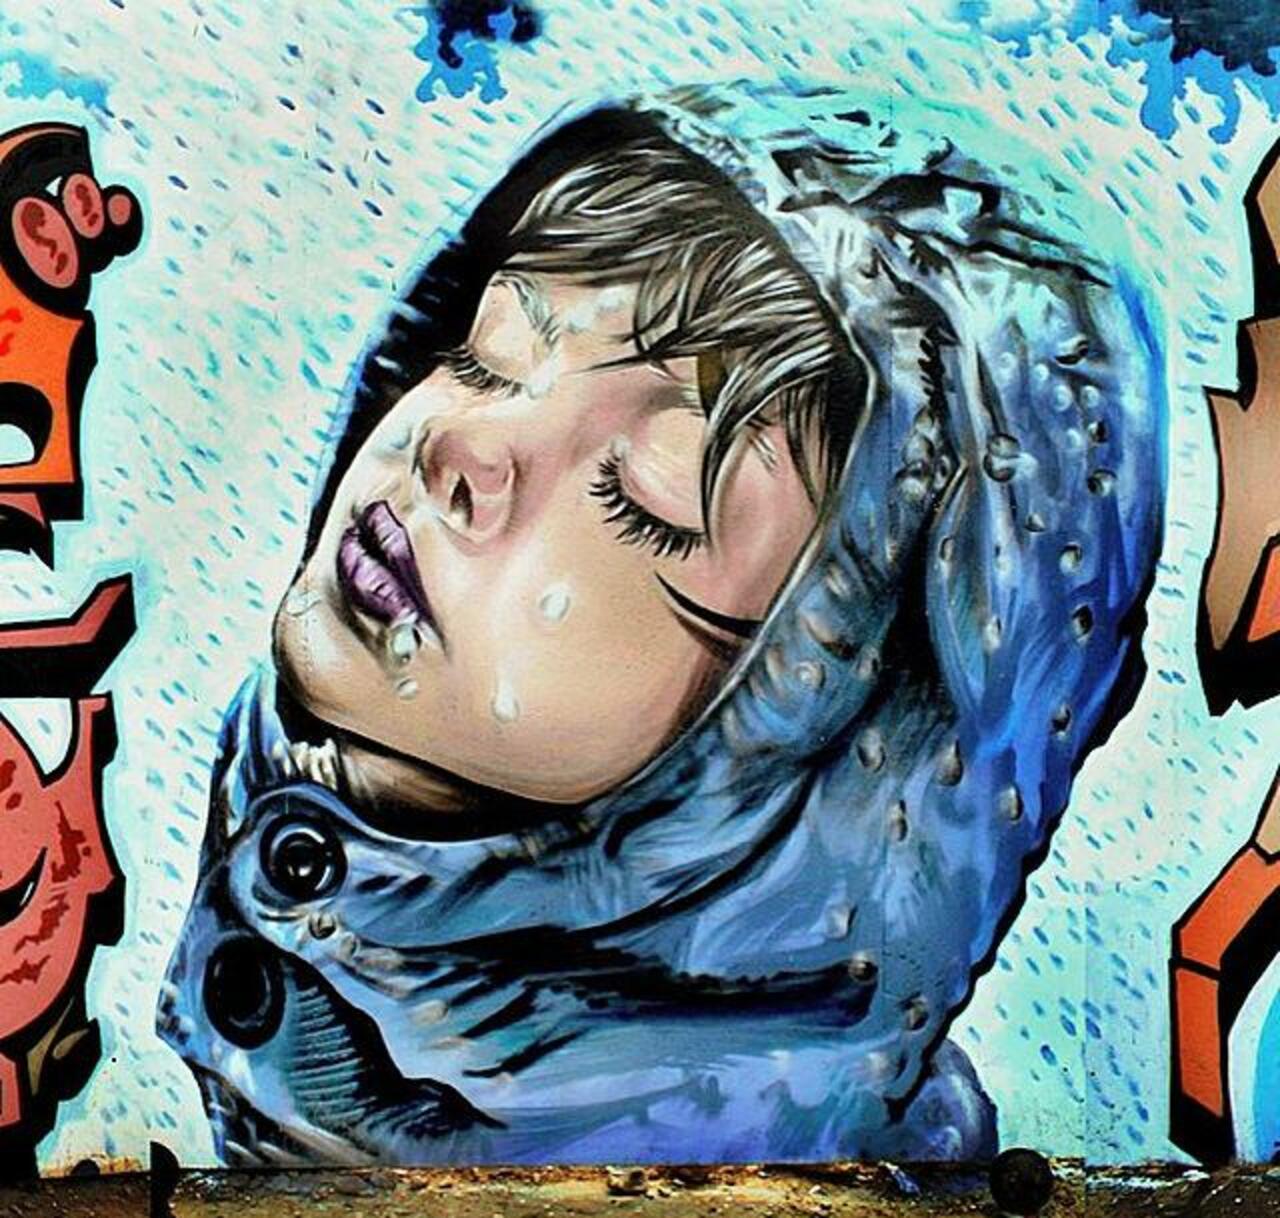 Street Art by the artist' Spooksoistreet' titled 'Raindrops' 

#art #arte #graffiti #streetart http://t.co/Nj28SGzNsV